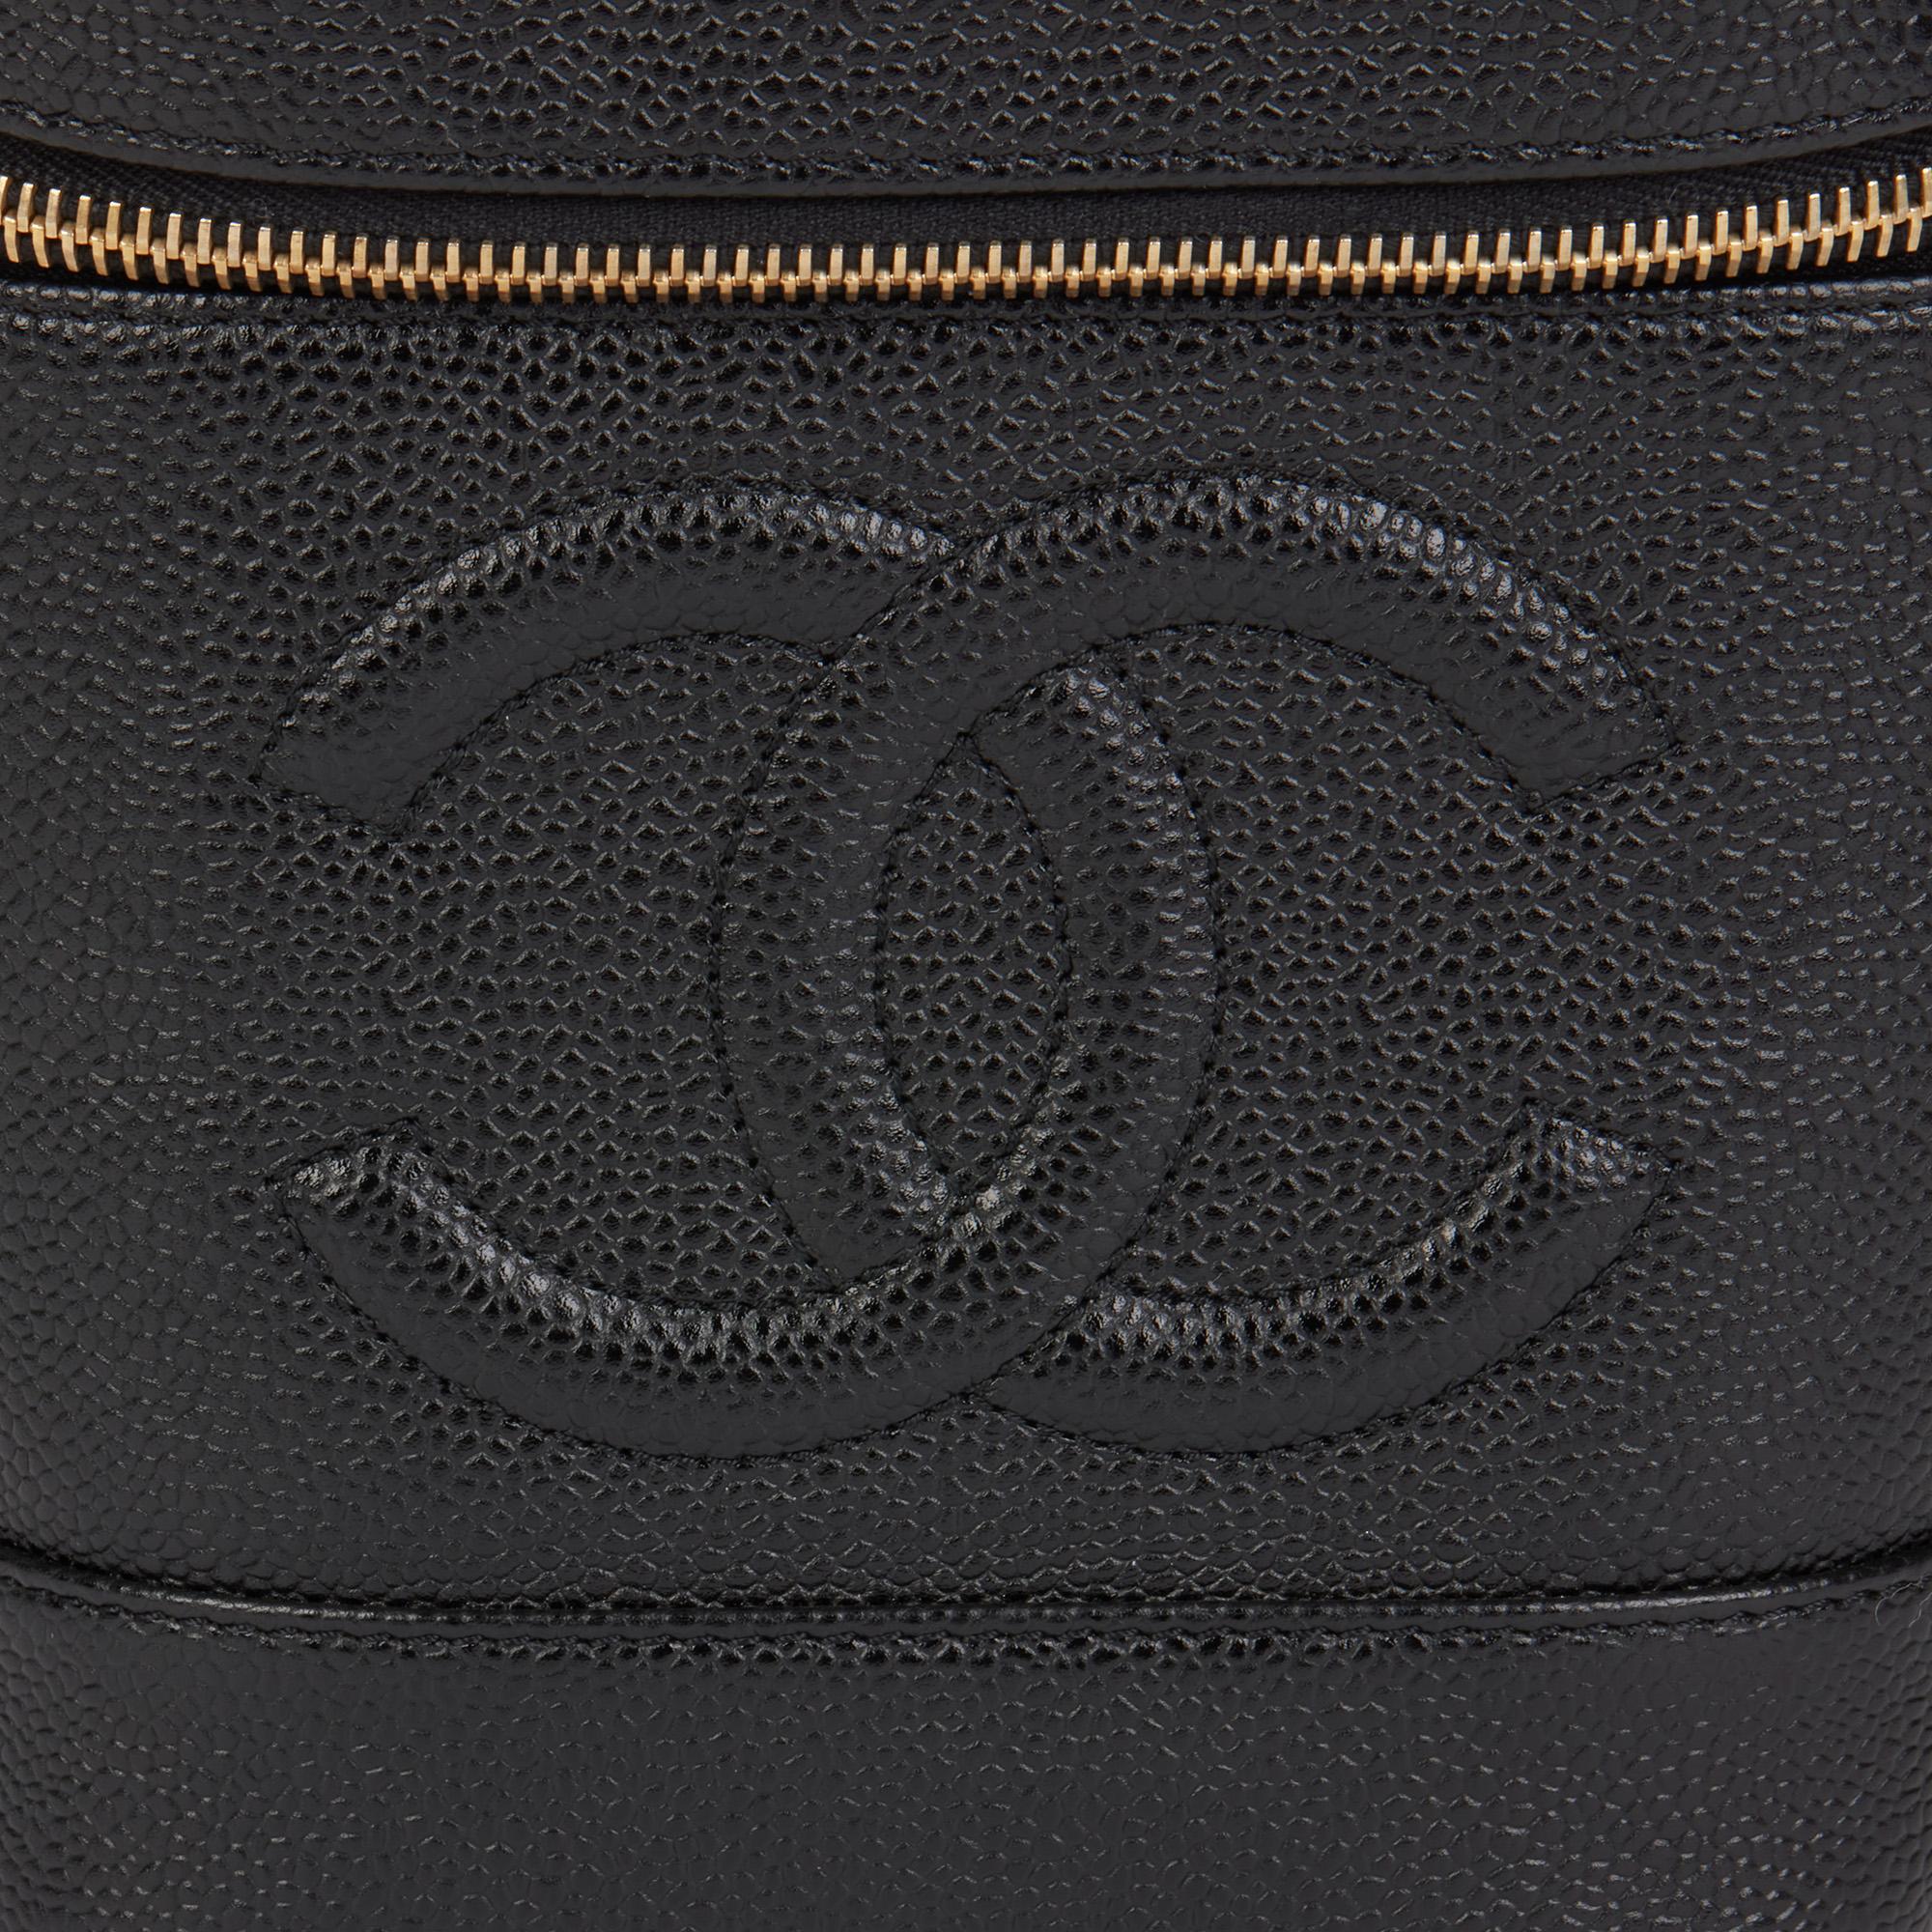 Chanel BLACK CAVIAR LEATHER VINTAGE TIMELESS VANITY CASE 1